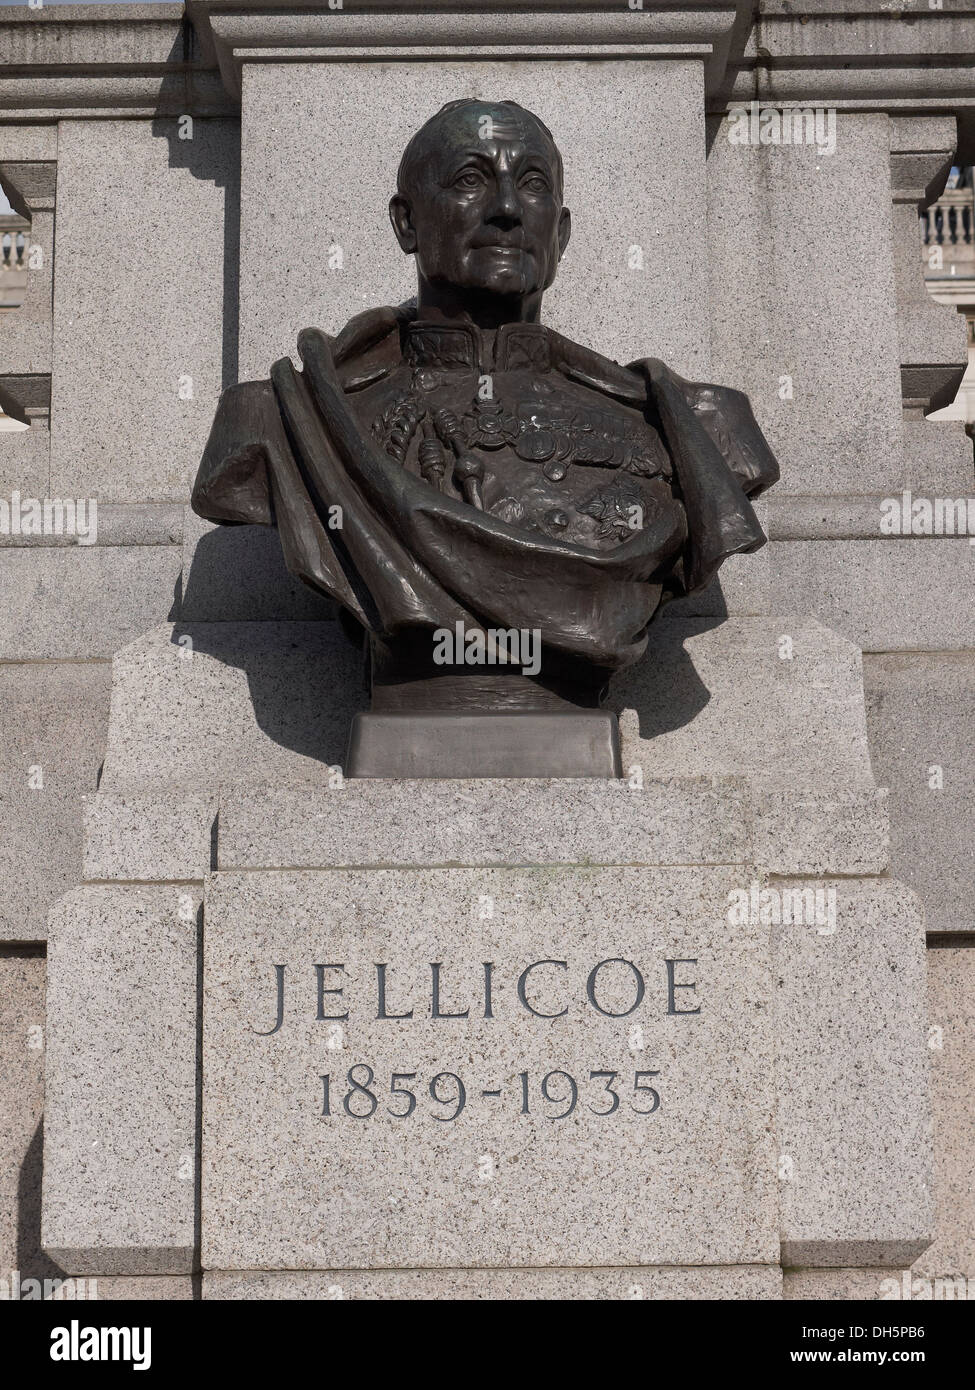 Bust of Admiral Jellicoe in Trafalgar square London Stock Photo